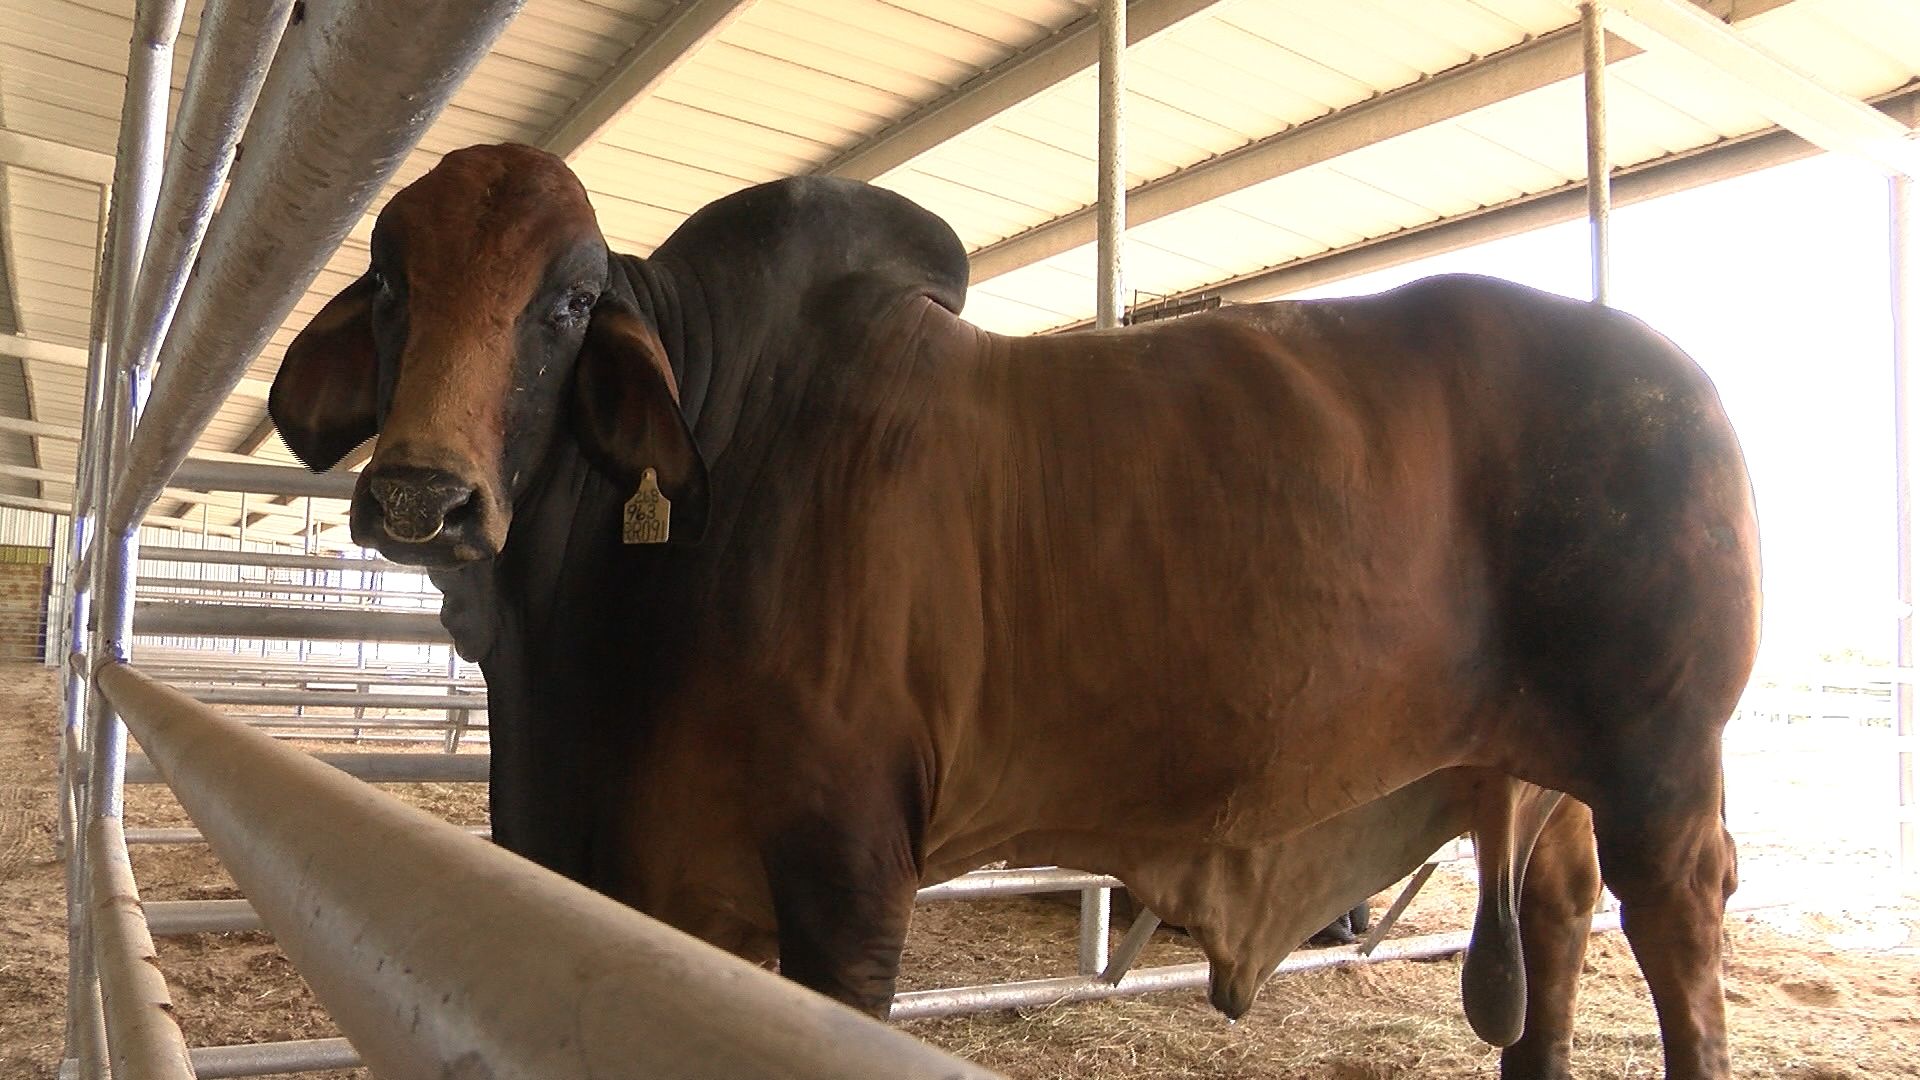 Brahman bulls play key role in Texas trade mission to Vietnam